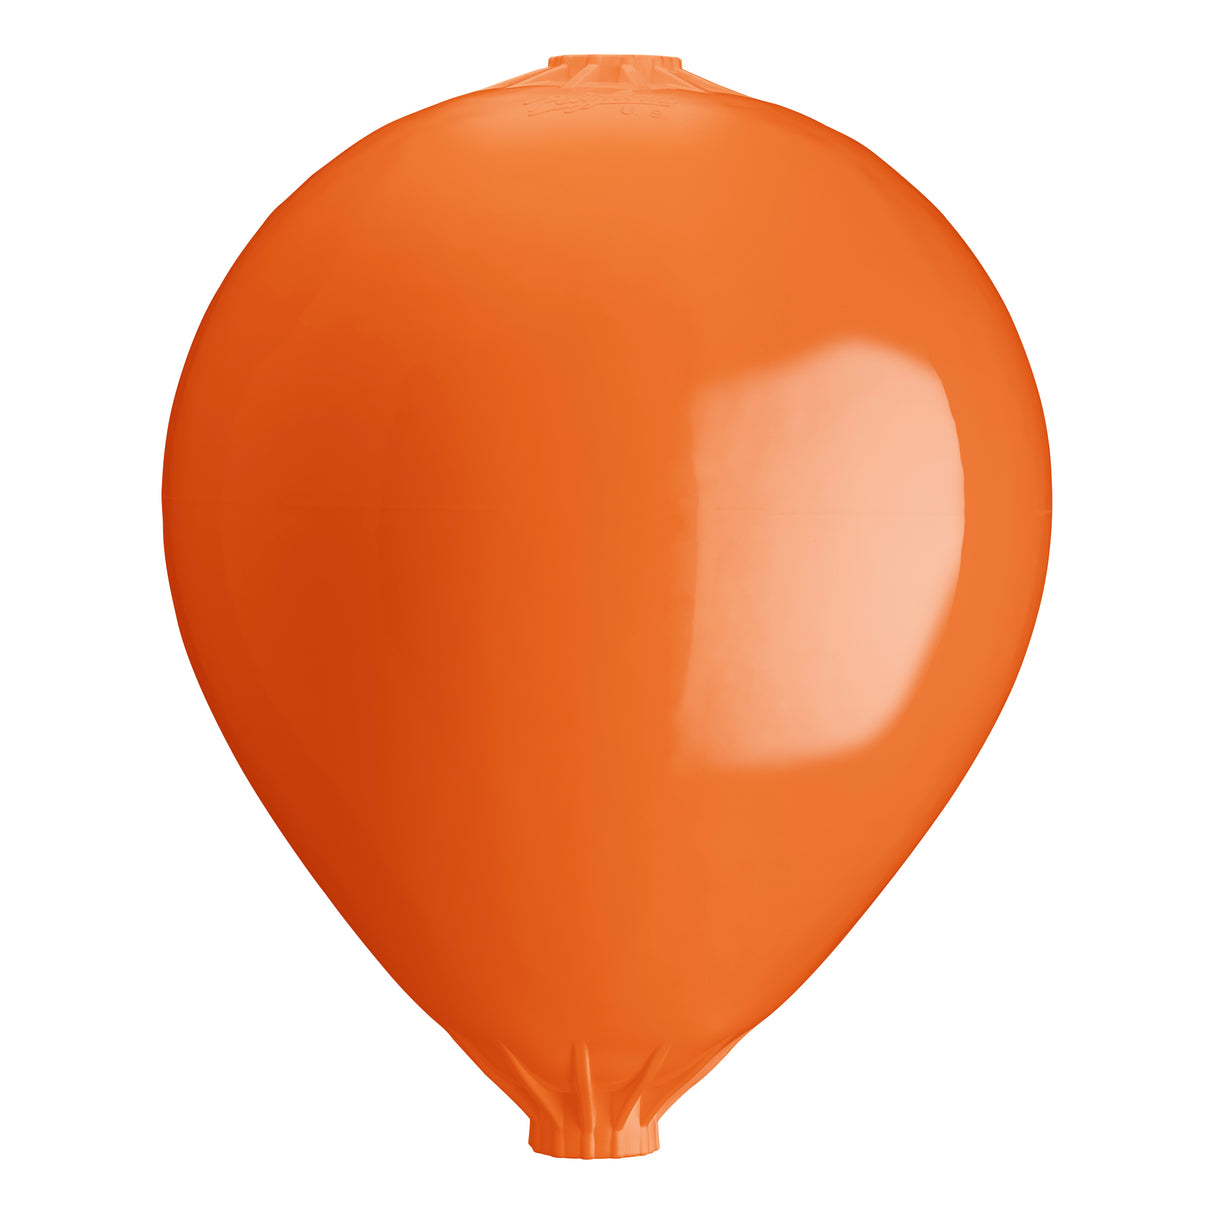 Hole through center mooring and marker buoy, Polyform CC-5 International Orange